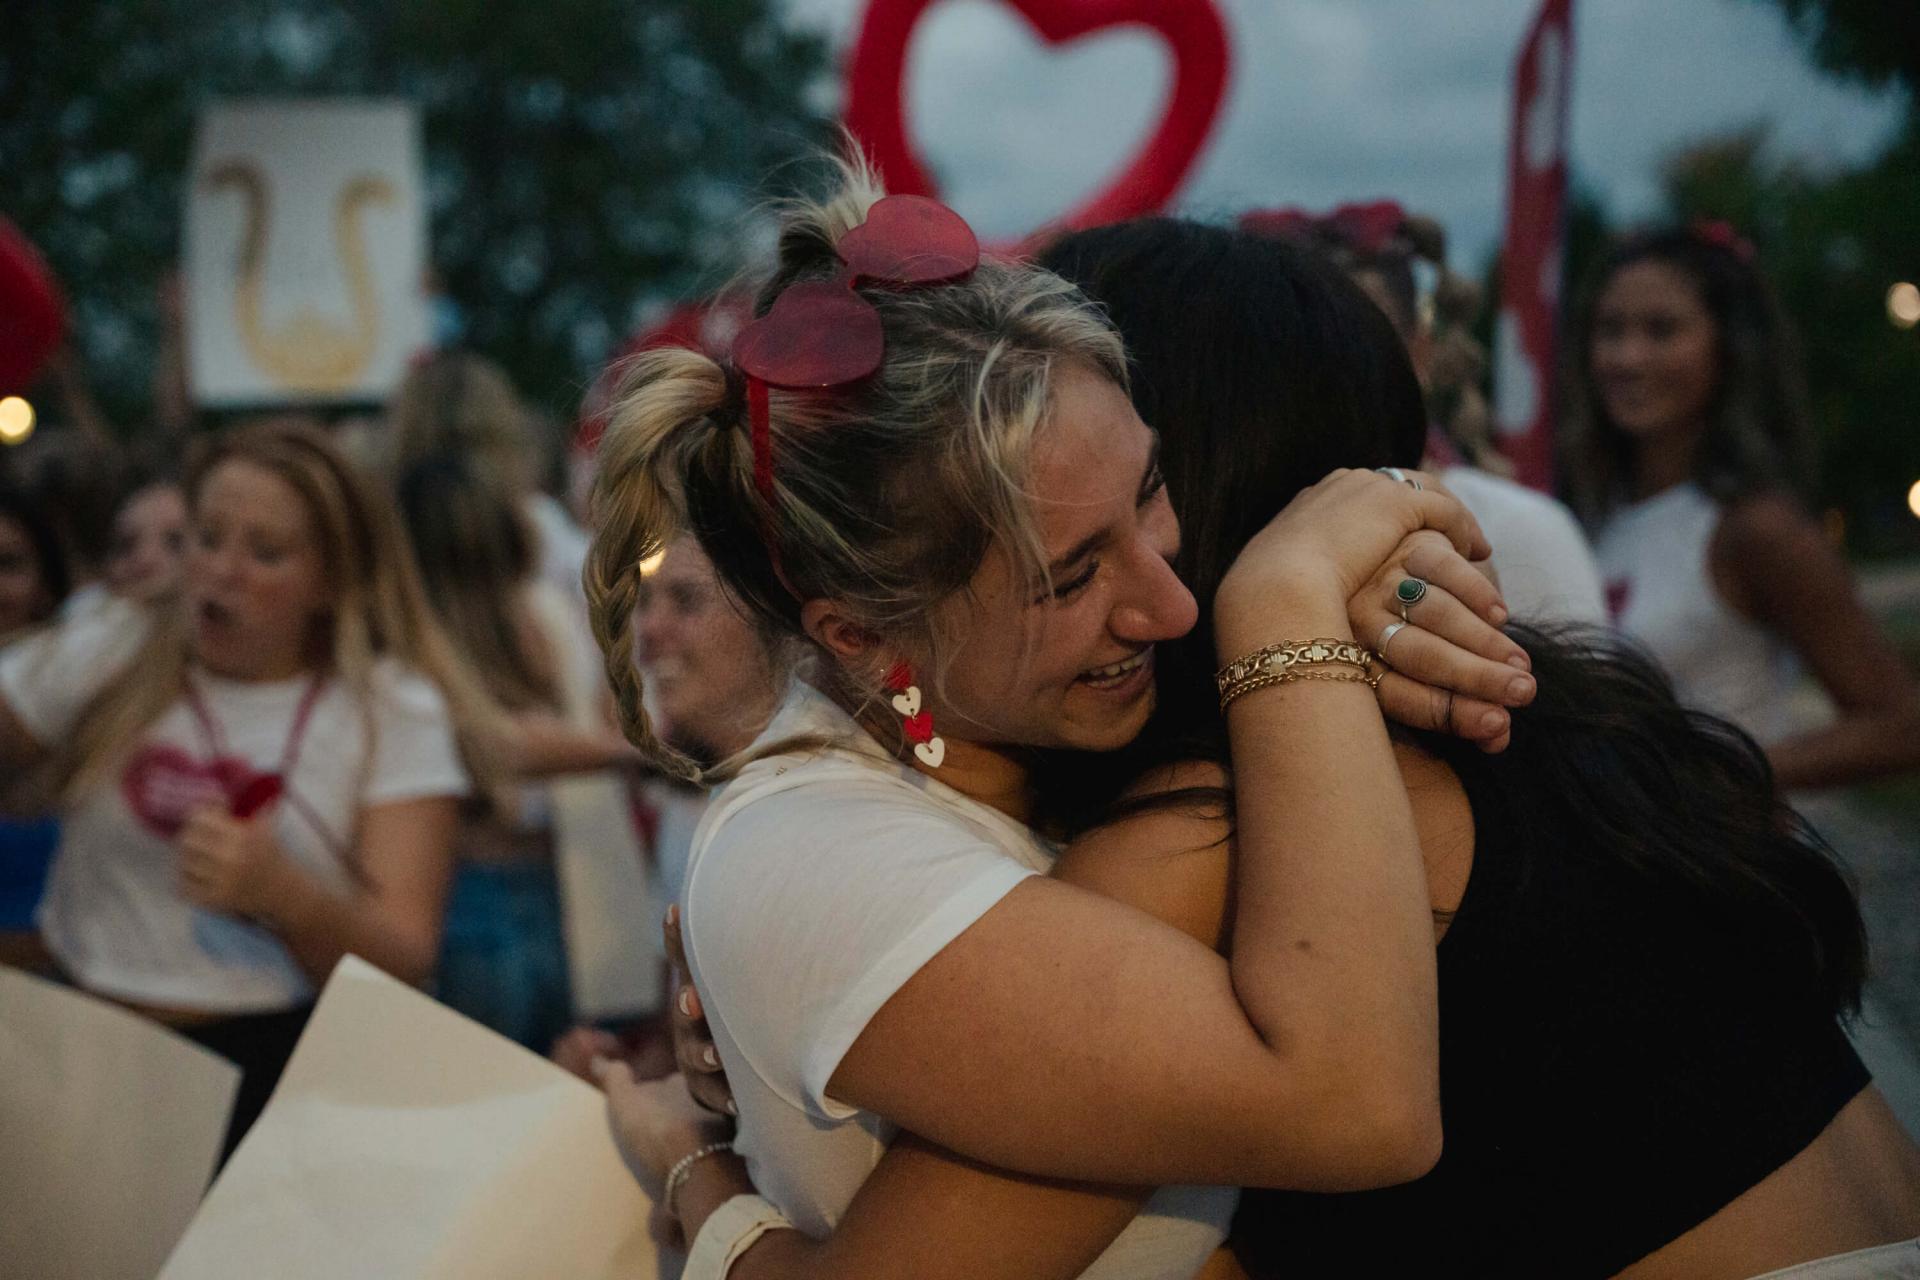 Two Sorority Girls hugging after an emotional bid night